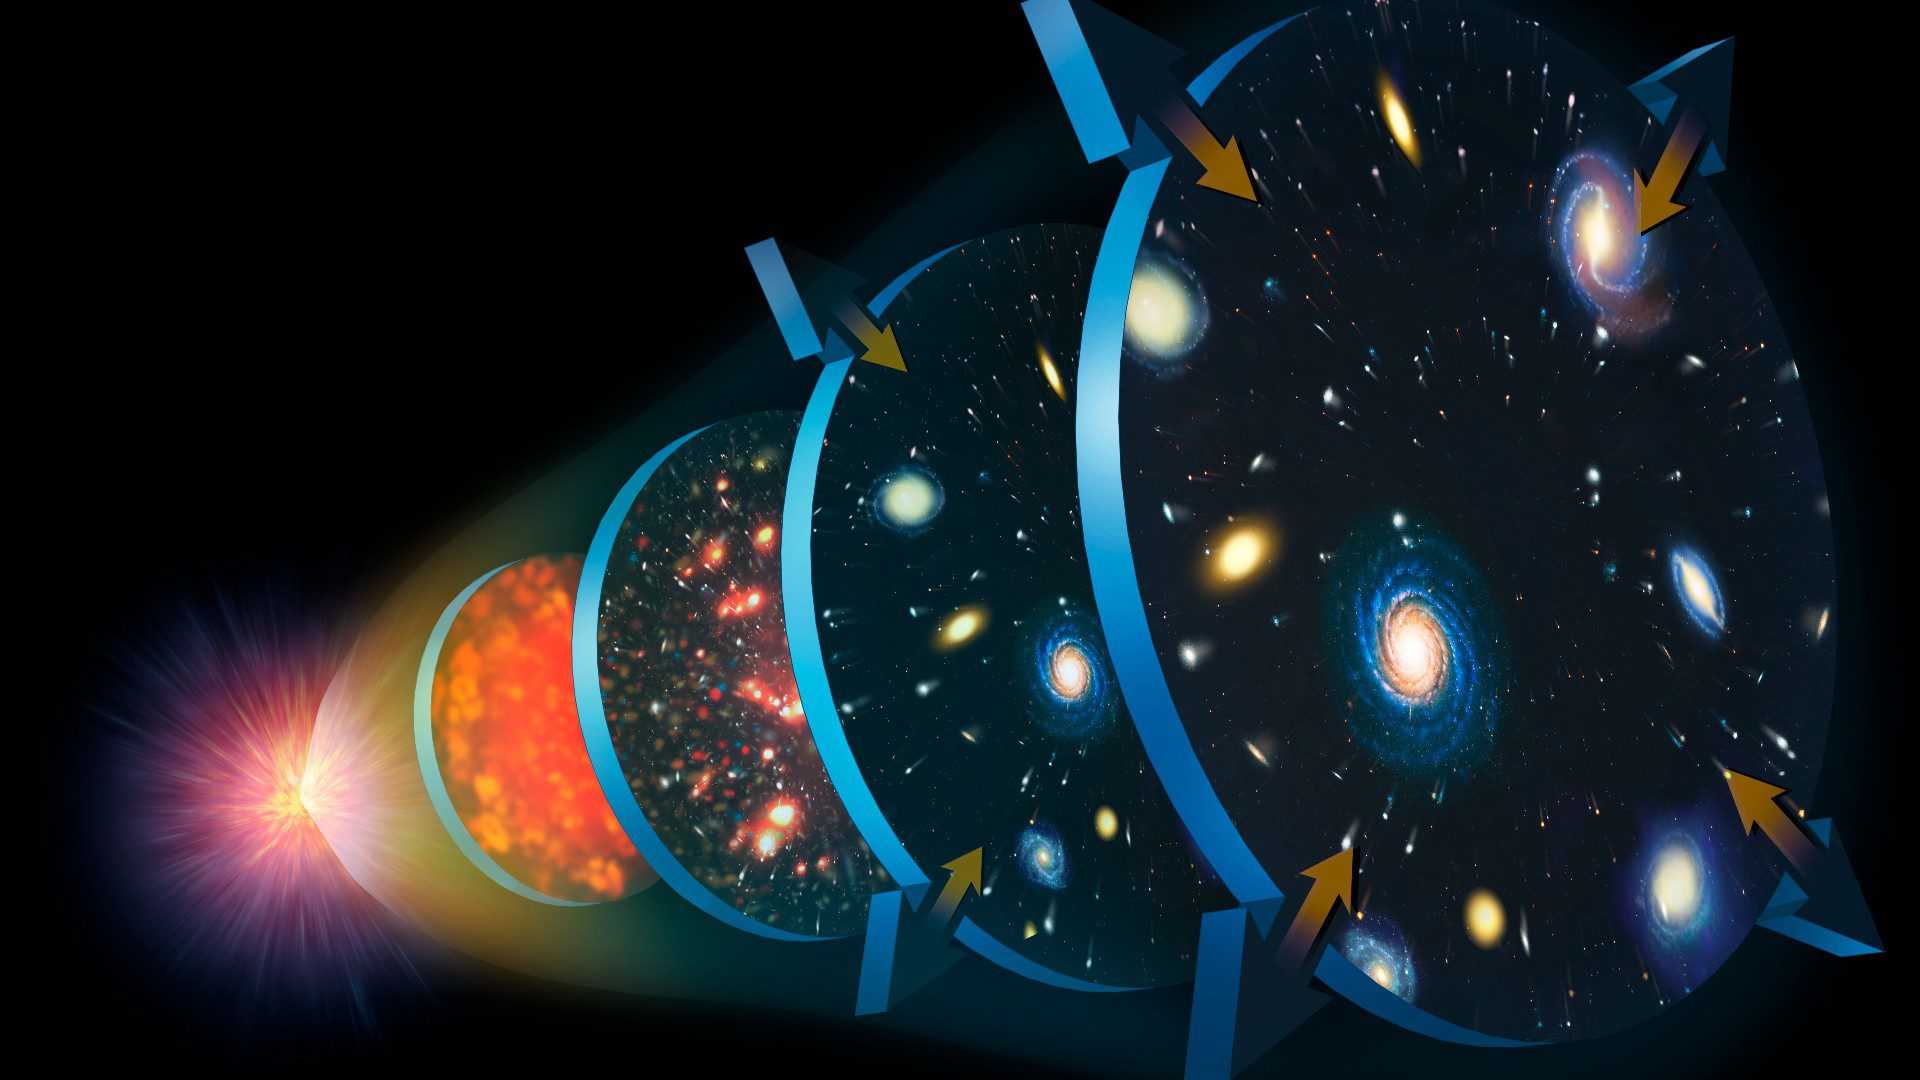 Eine Illustration der Expansion des Universums.